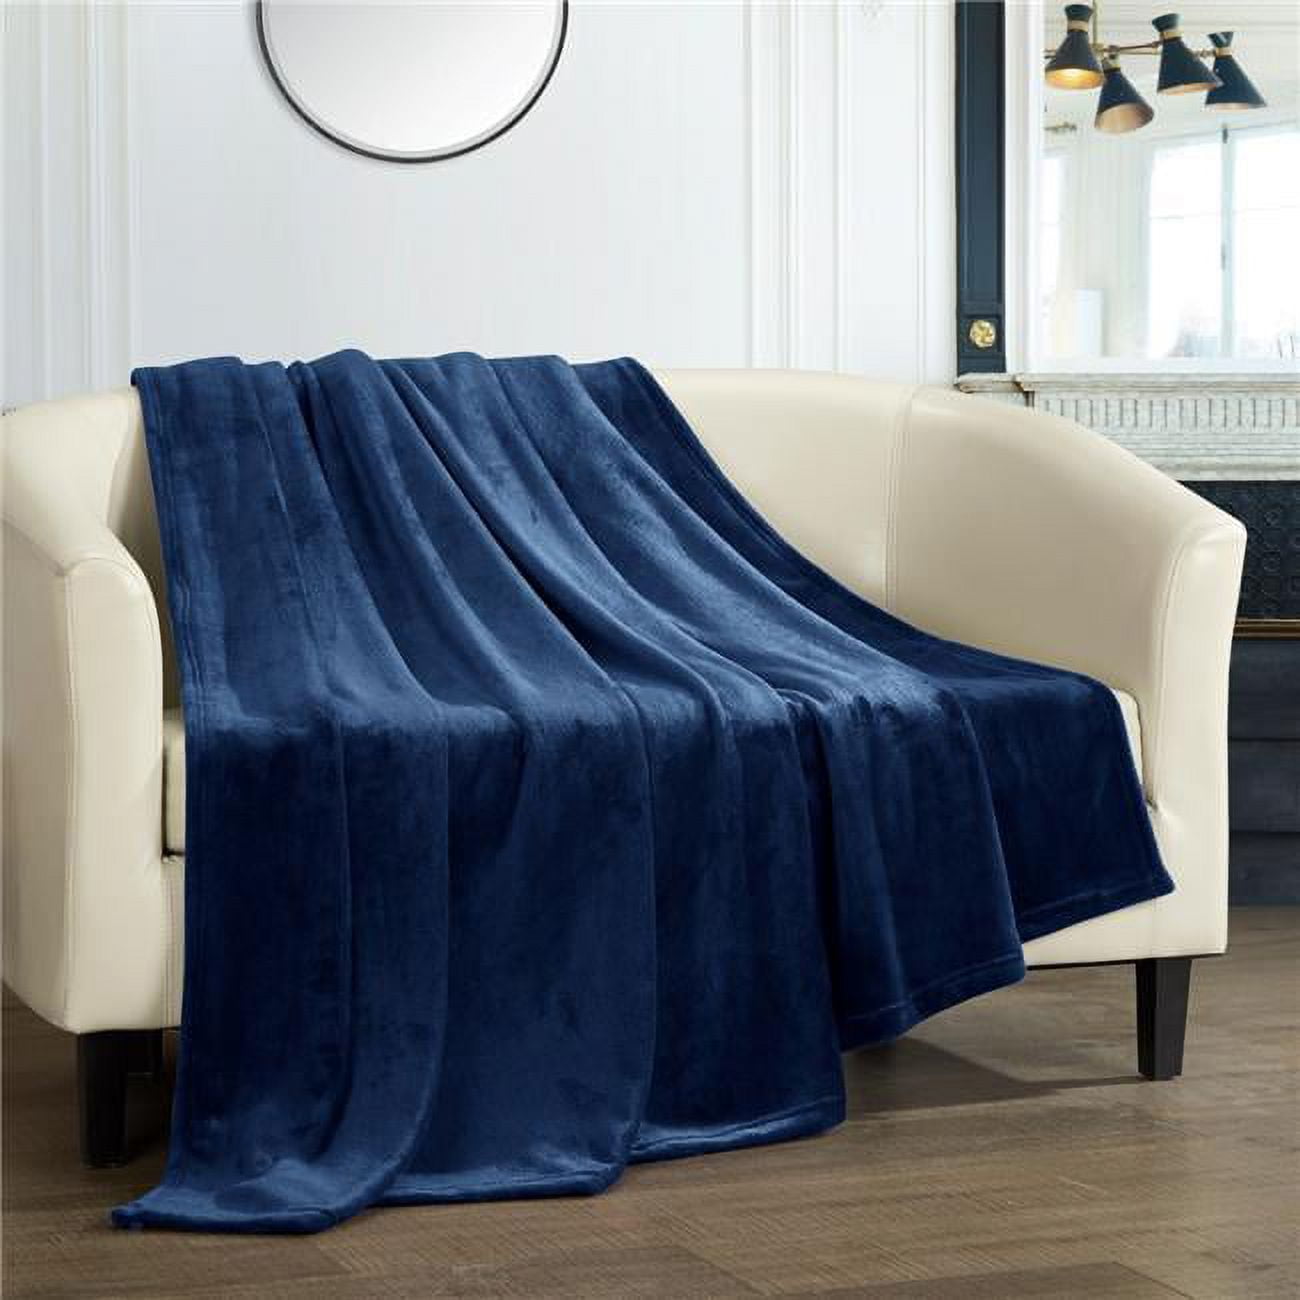 Picture of Chic Home BTB24923-US Kaden Throw Blanket Cozy Super Soft Ultra Plush Micro Mink Fleece Decorative Design, 50 x 60 in. - Navy